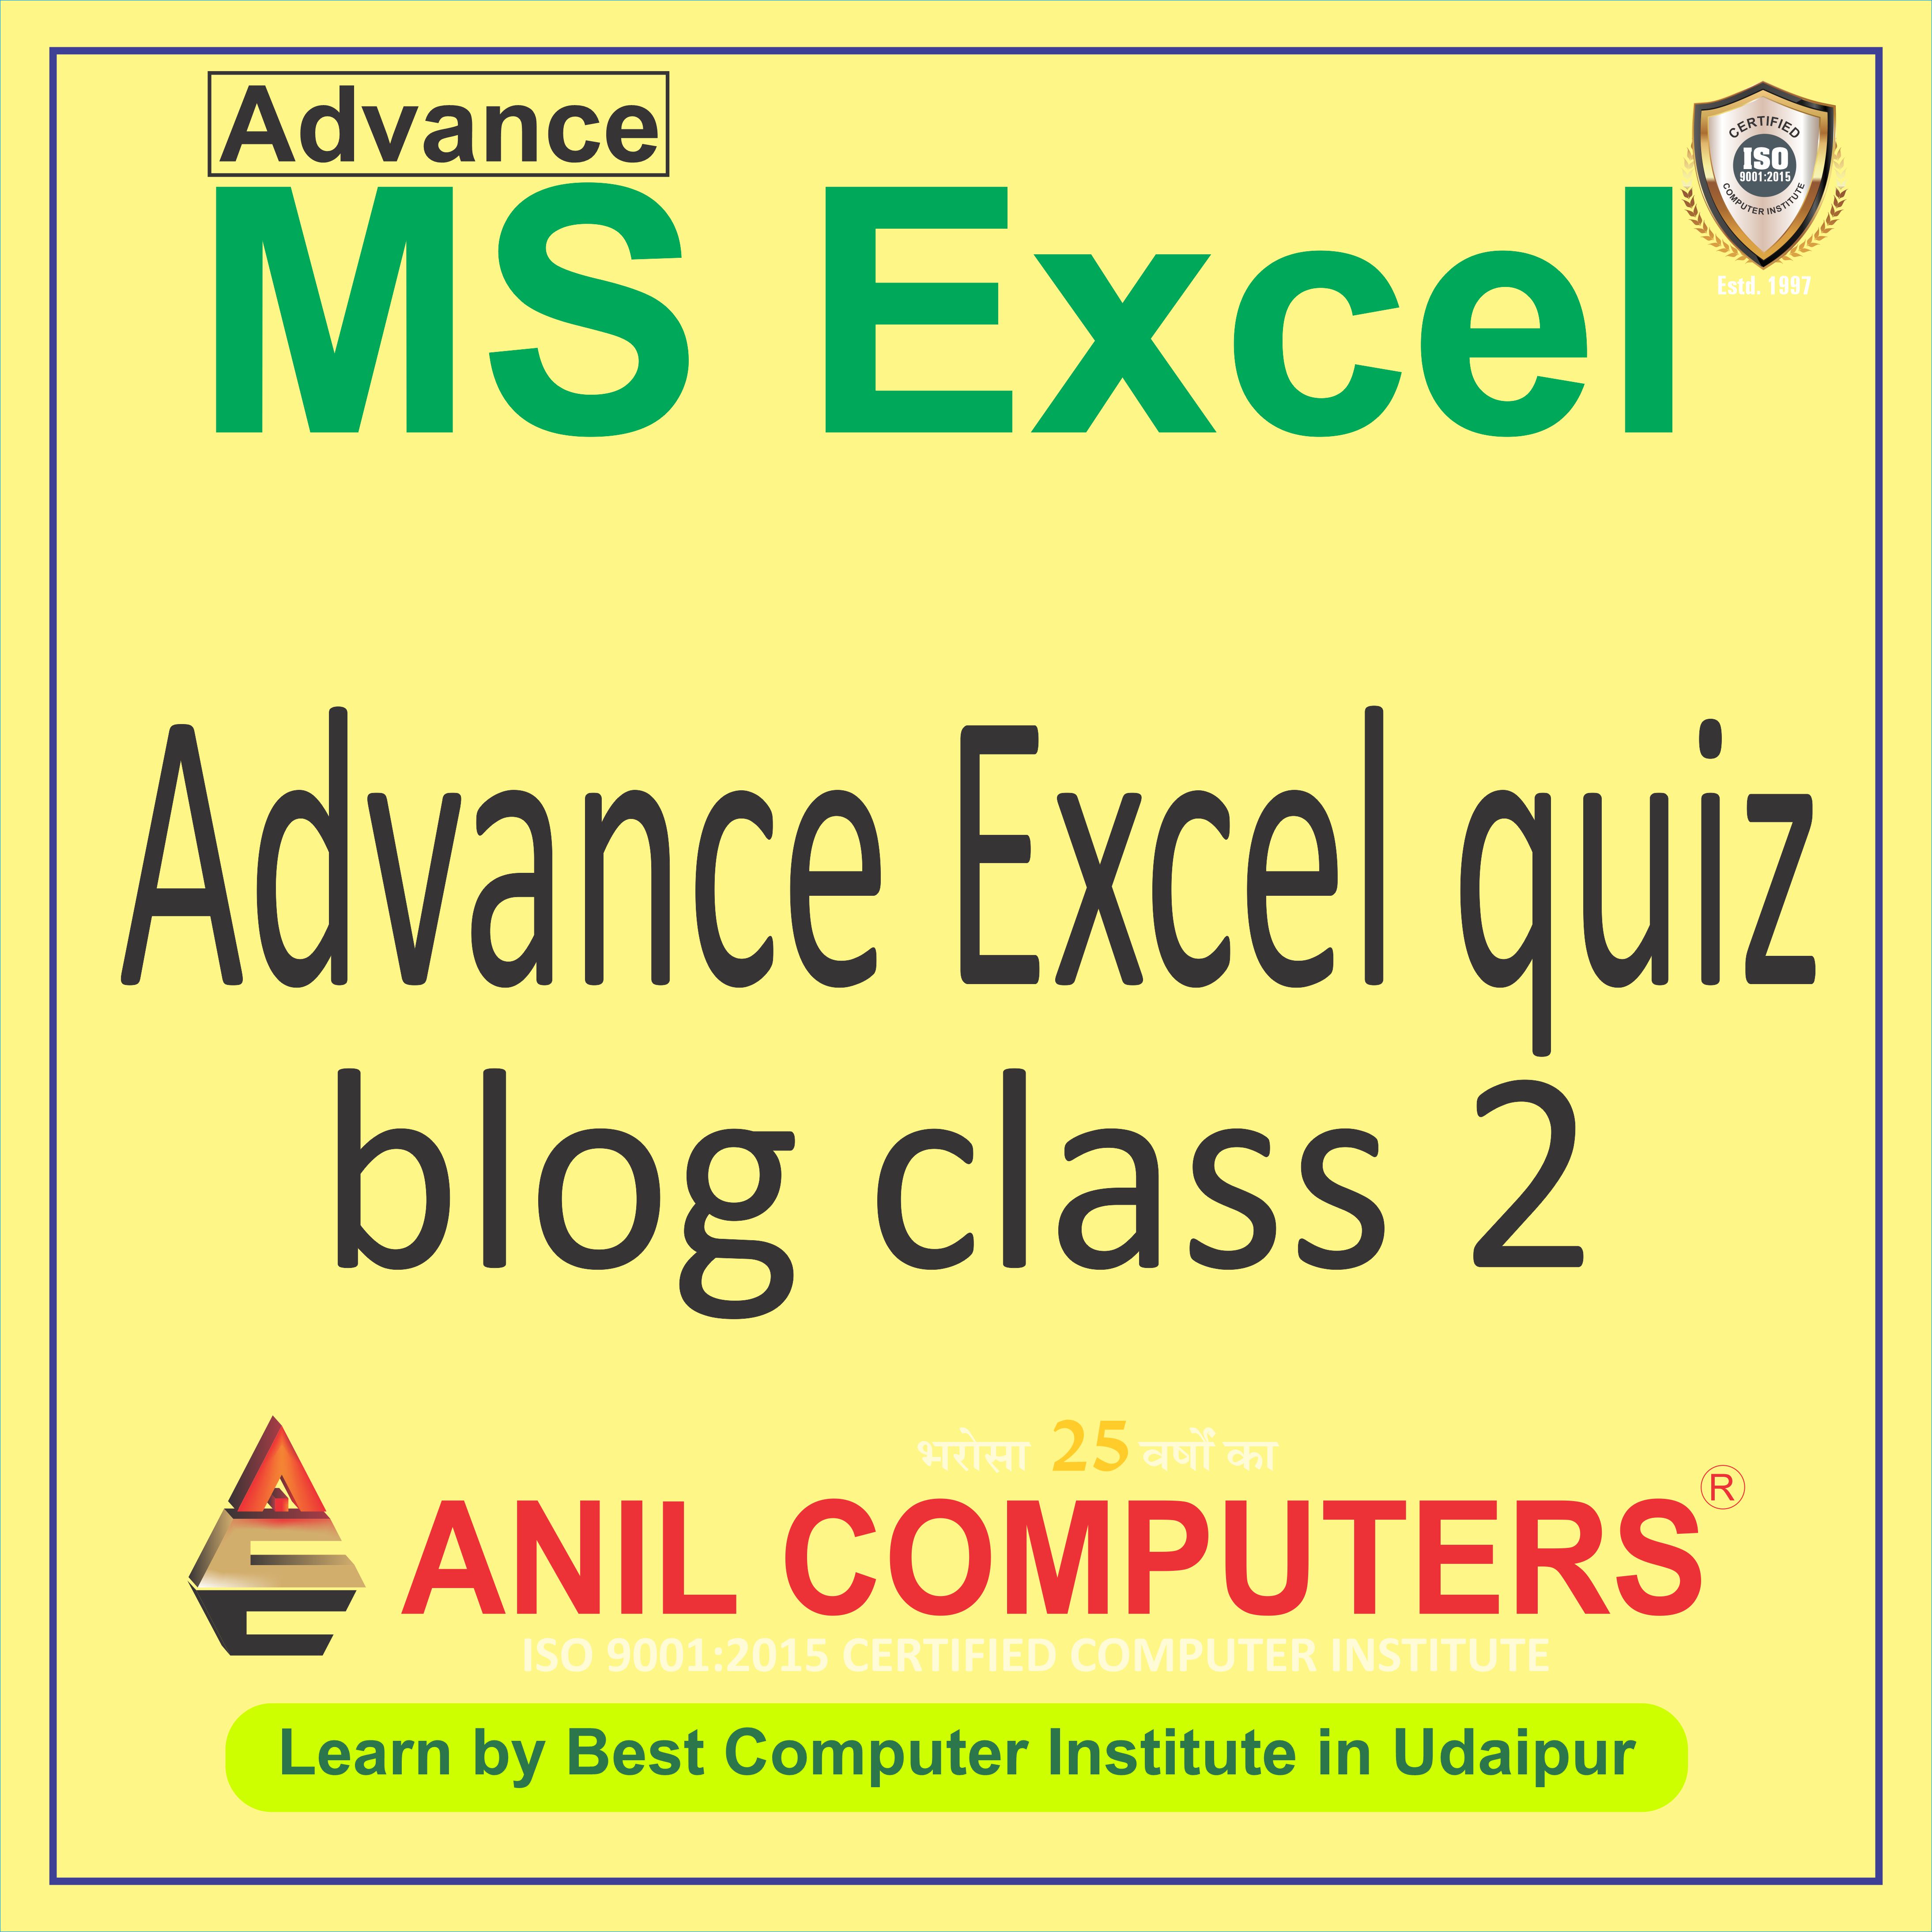 Advance Excel quiz blog class 2